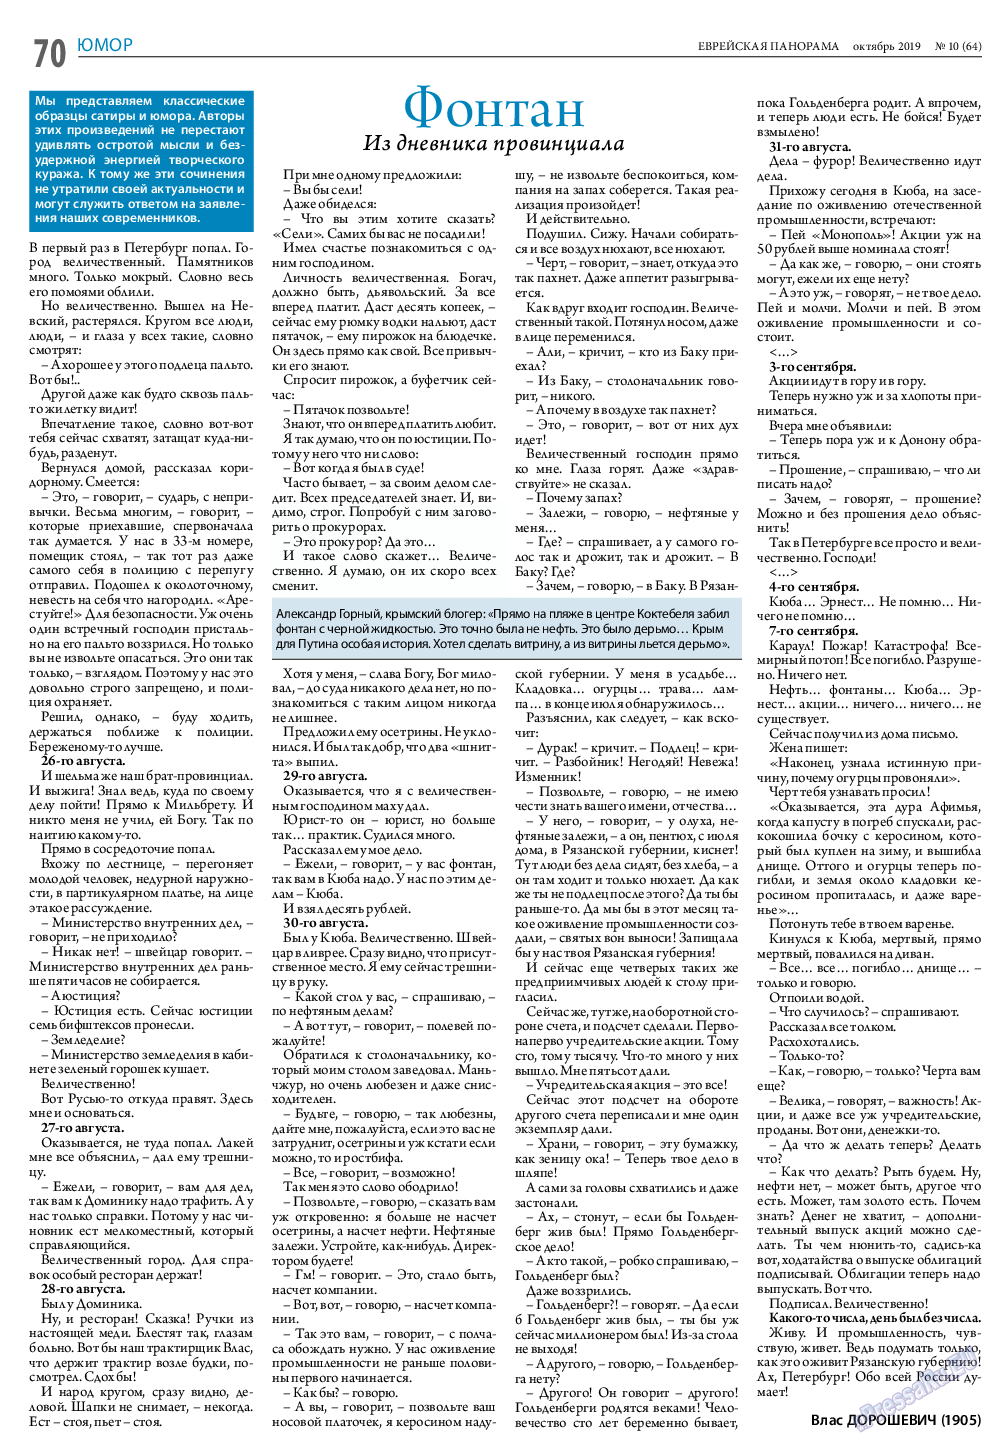 Еврейская панорама, газета. 2019 №10 стр.70